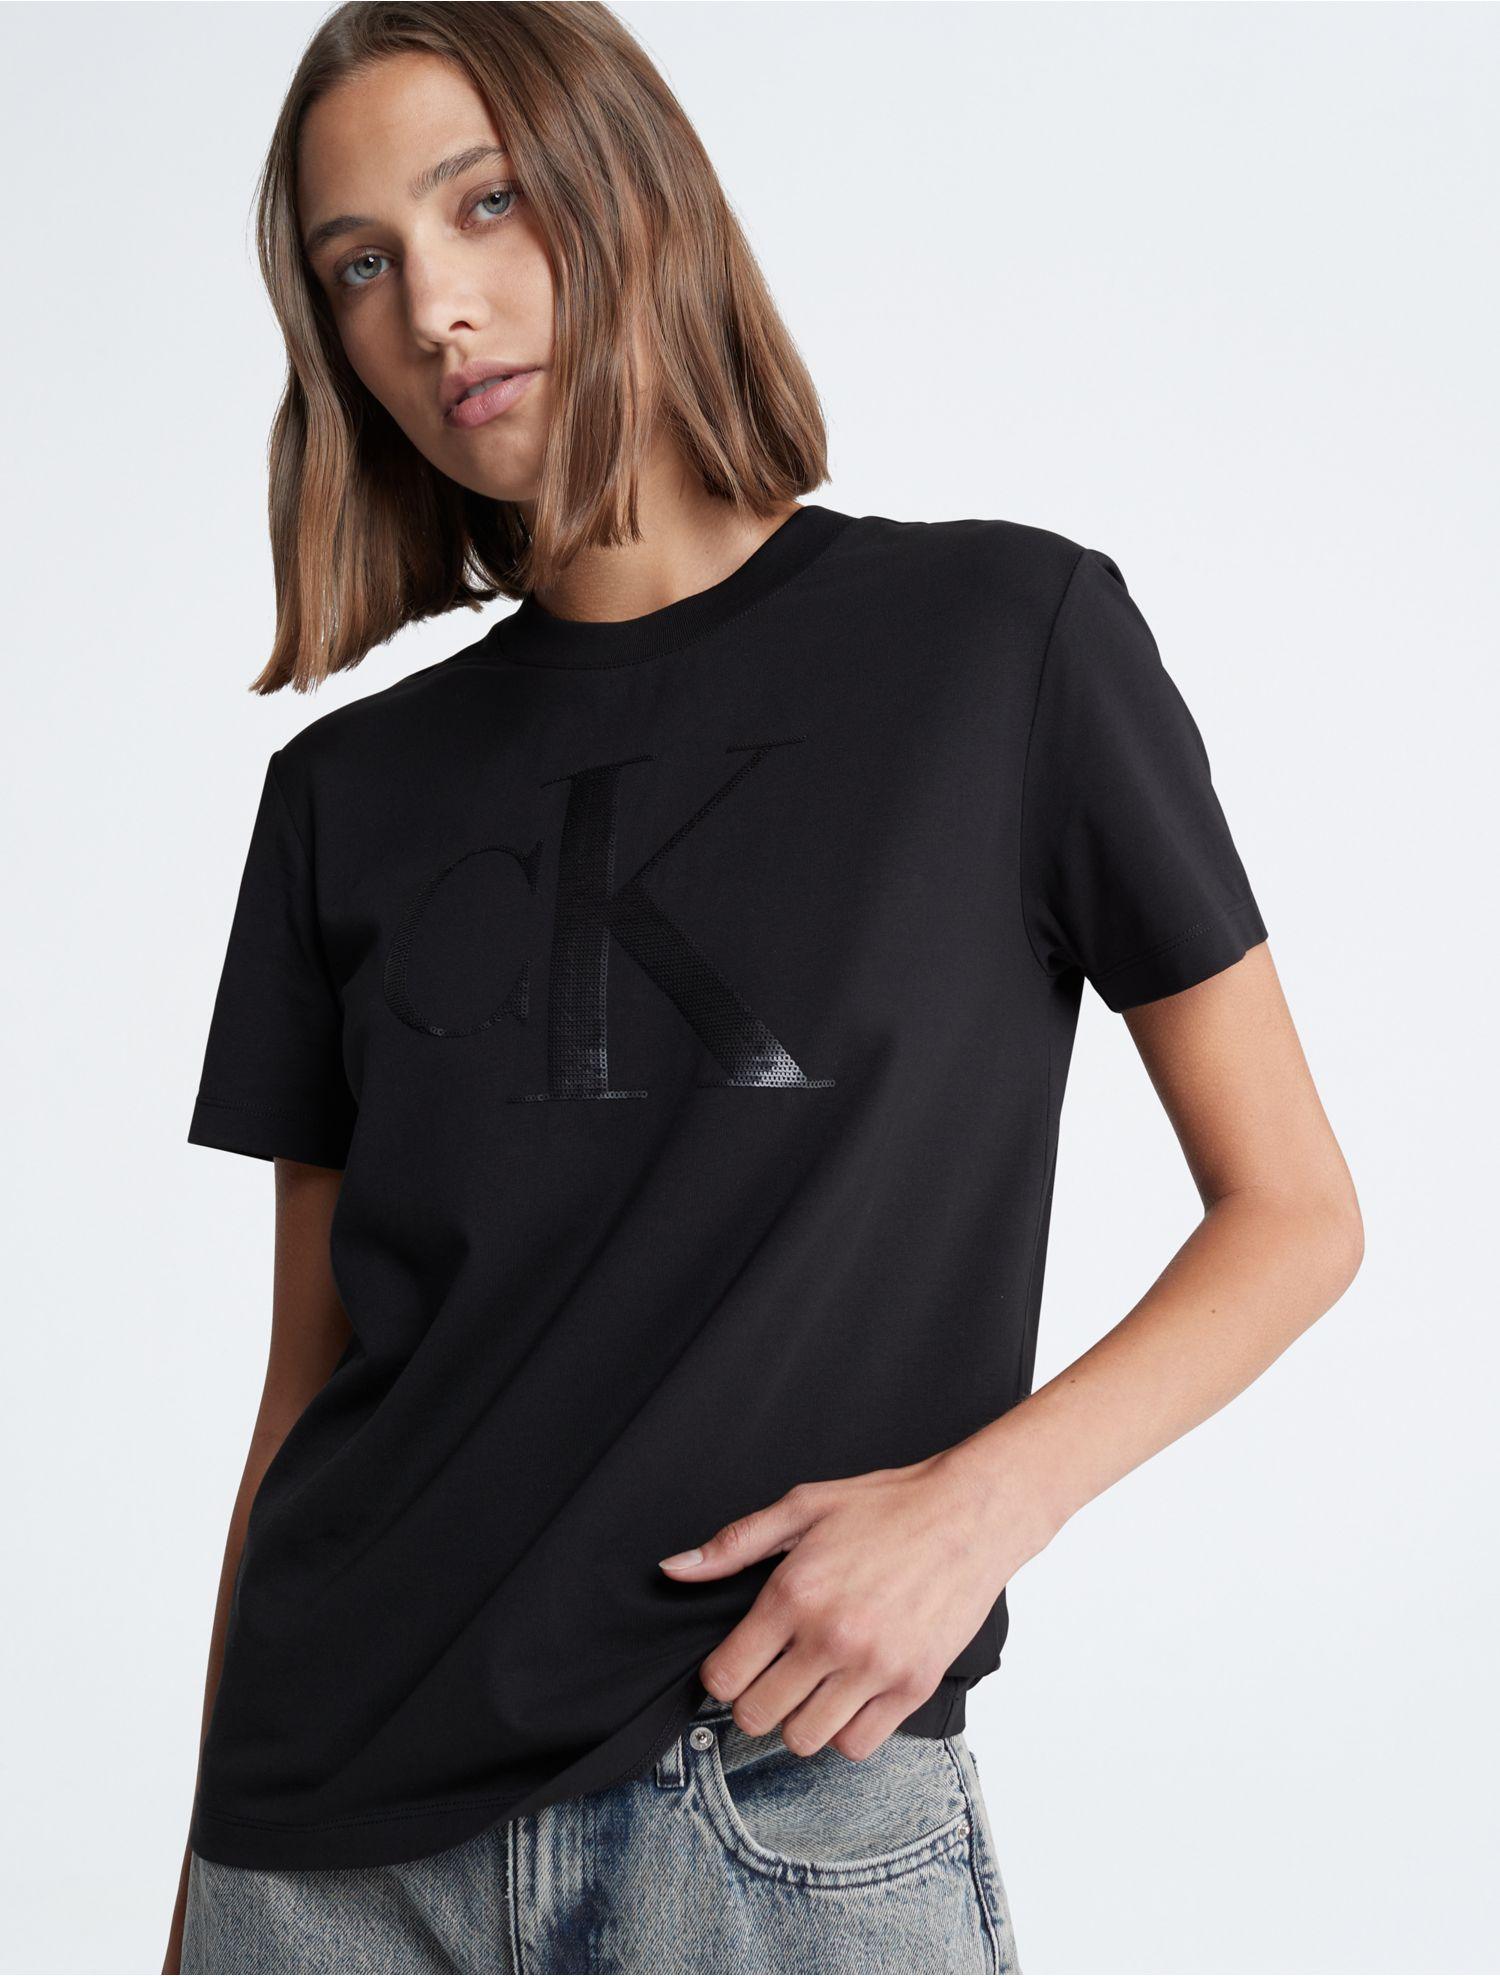 https://cdna.lystit.com/photos/calvinklein/387d7274/calvin-klein-Black-Beauty-Sequin-Monogram-Logo-Crewneck-T-shirt.jpeg